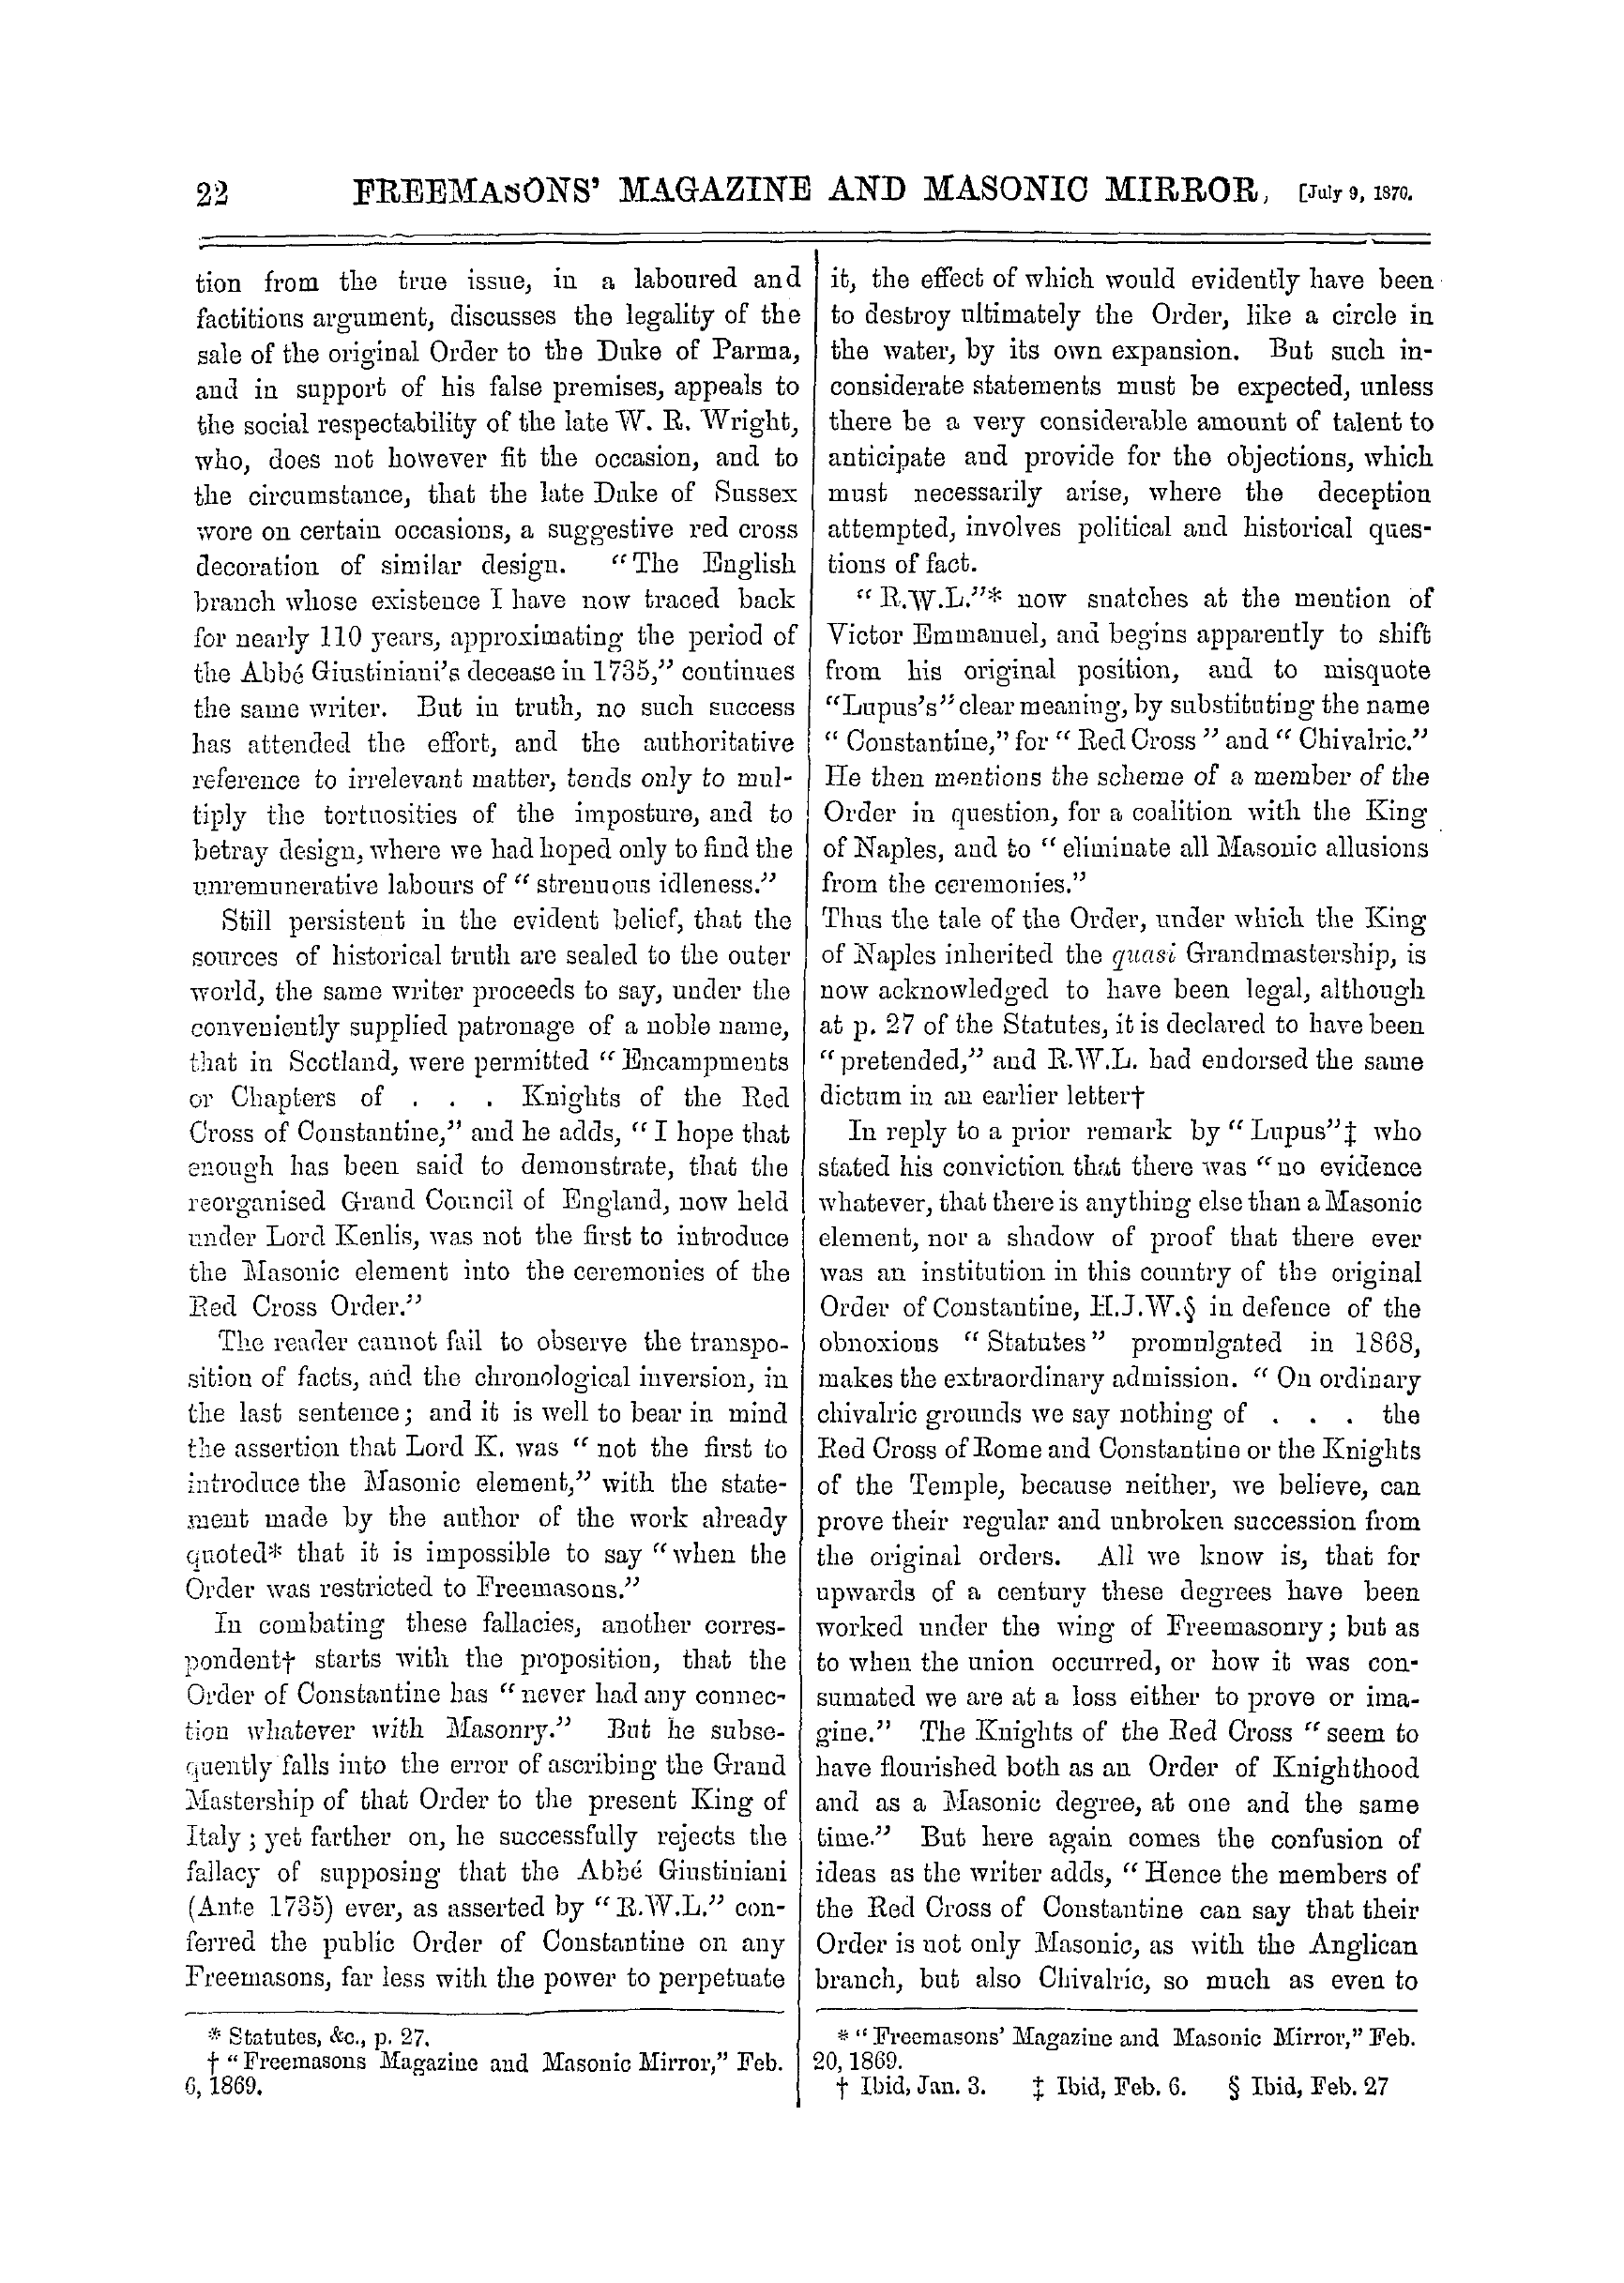 The Freemasons' Monthly Magazine: 1870-07-09 - Masonic Red Cross Order.